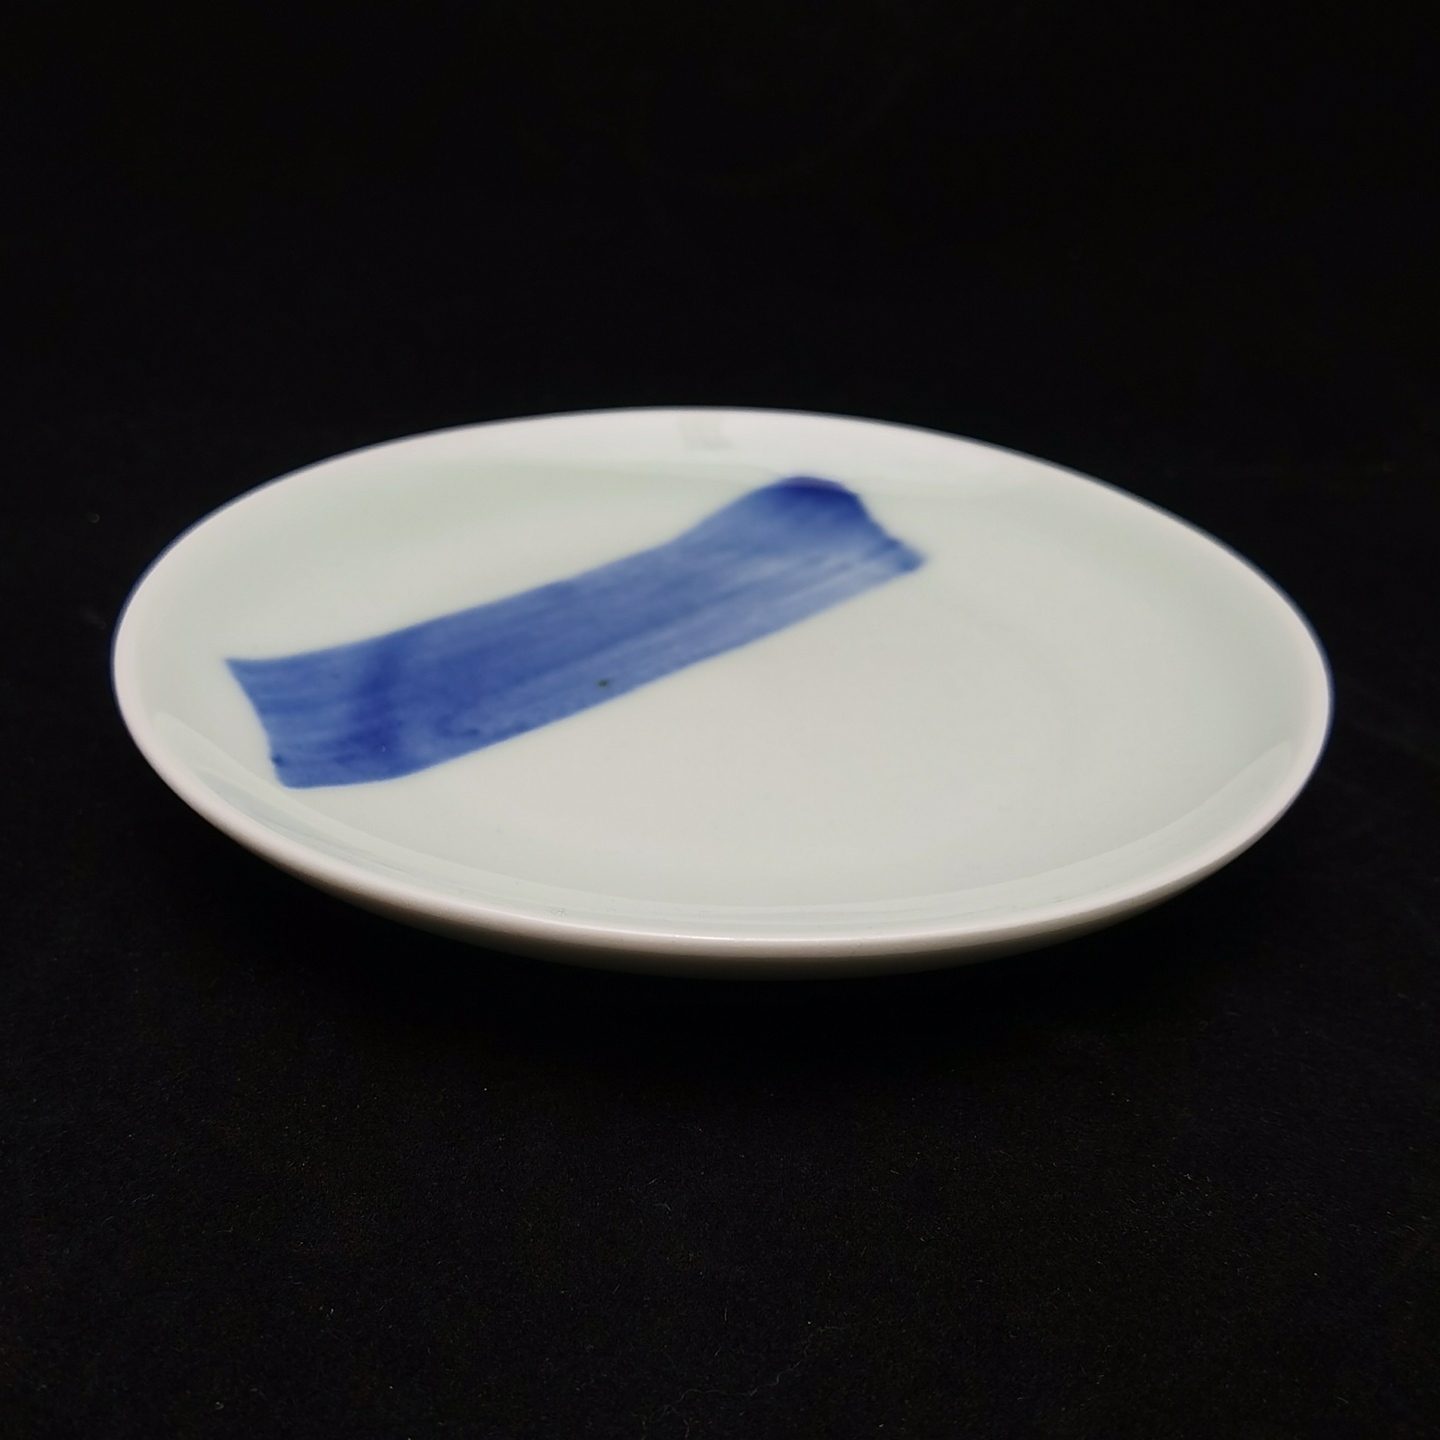 China Blue Brush Stroke Round Plate - 150mm